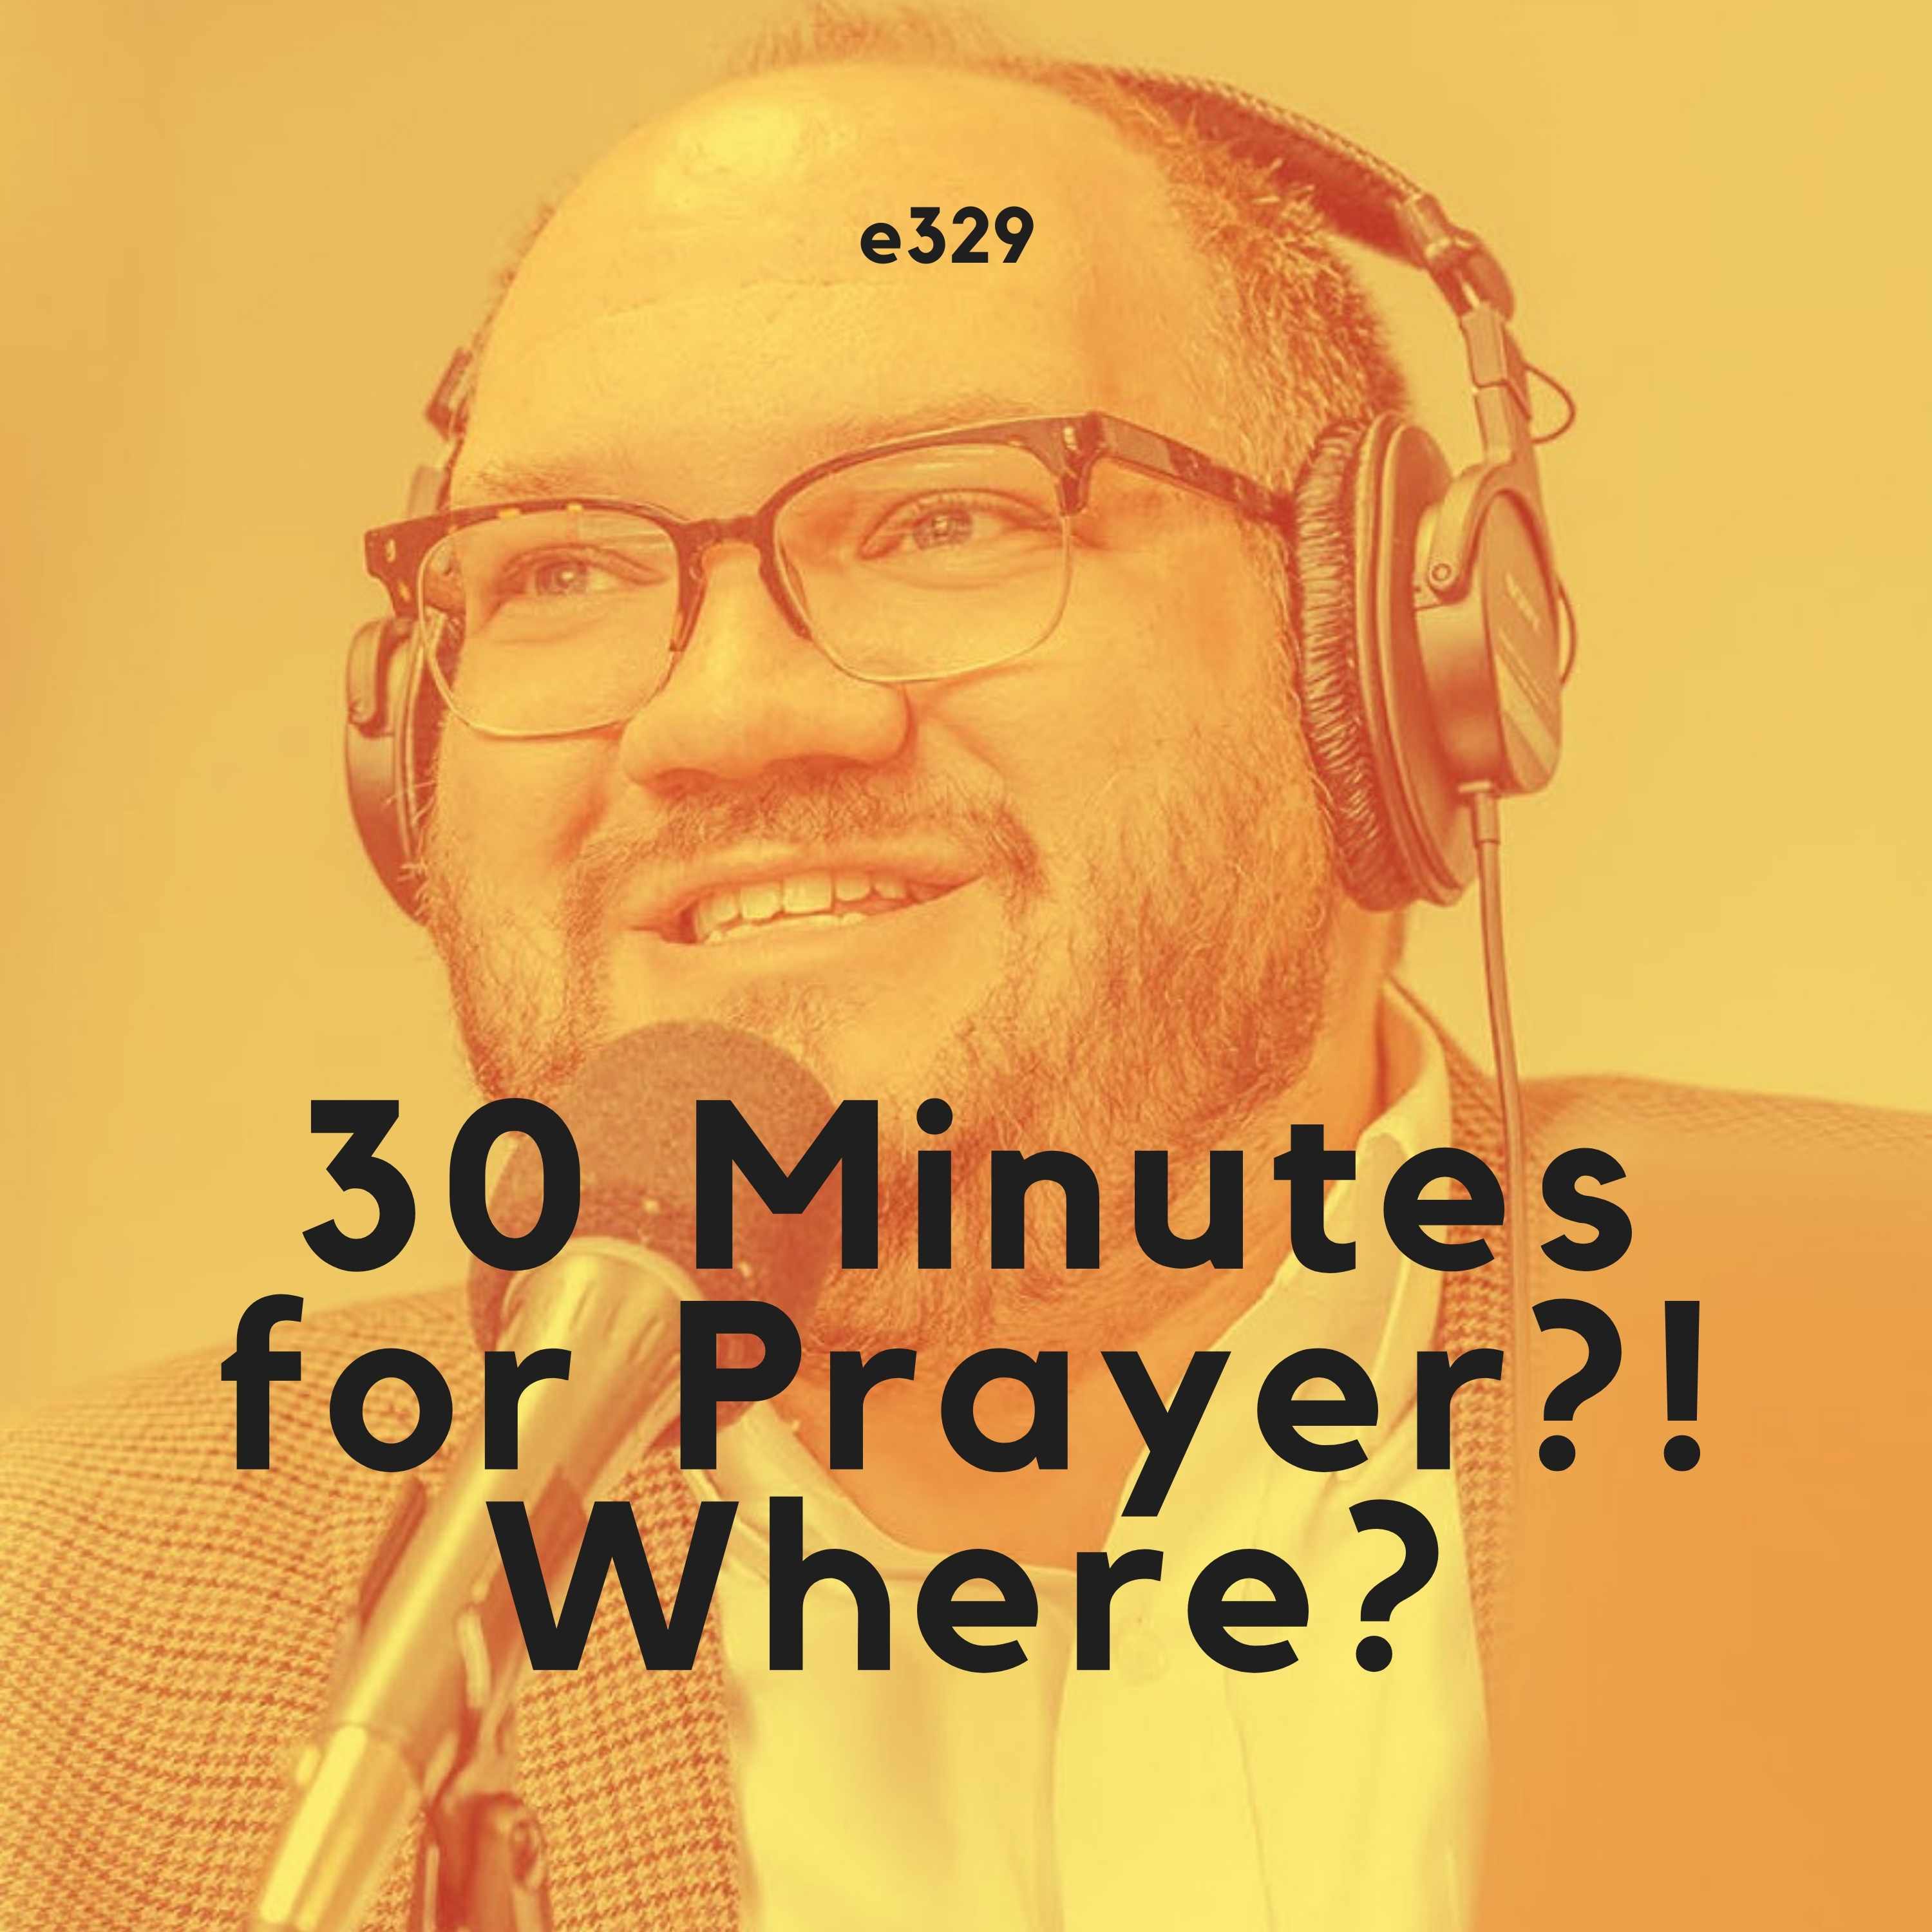 30 Minutes for Prayer?! Where?